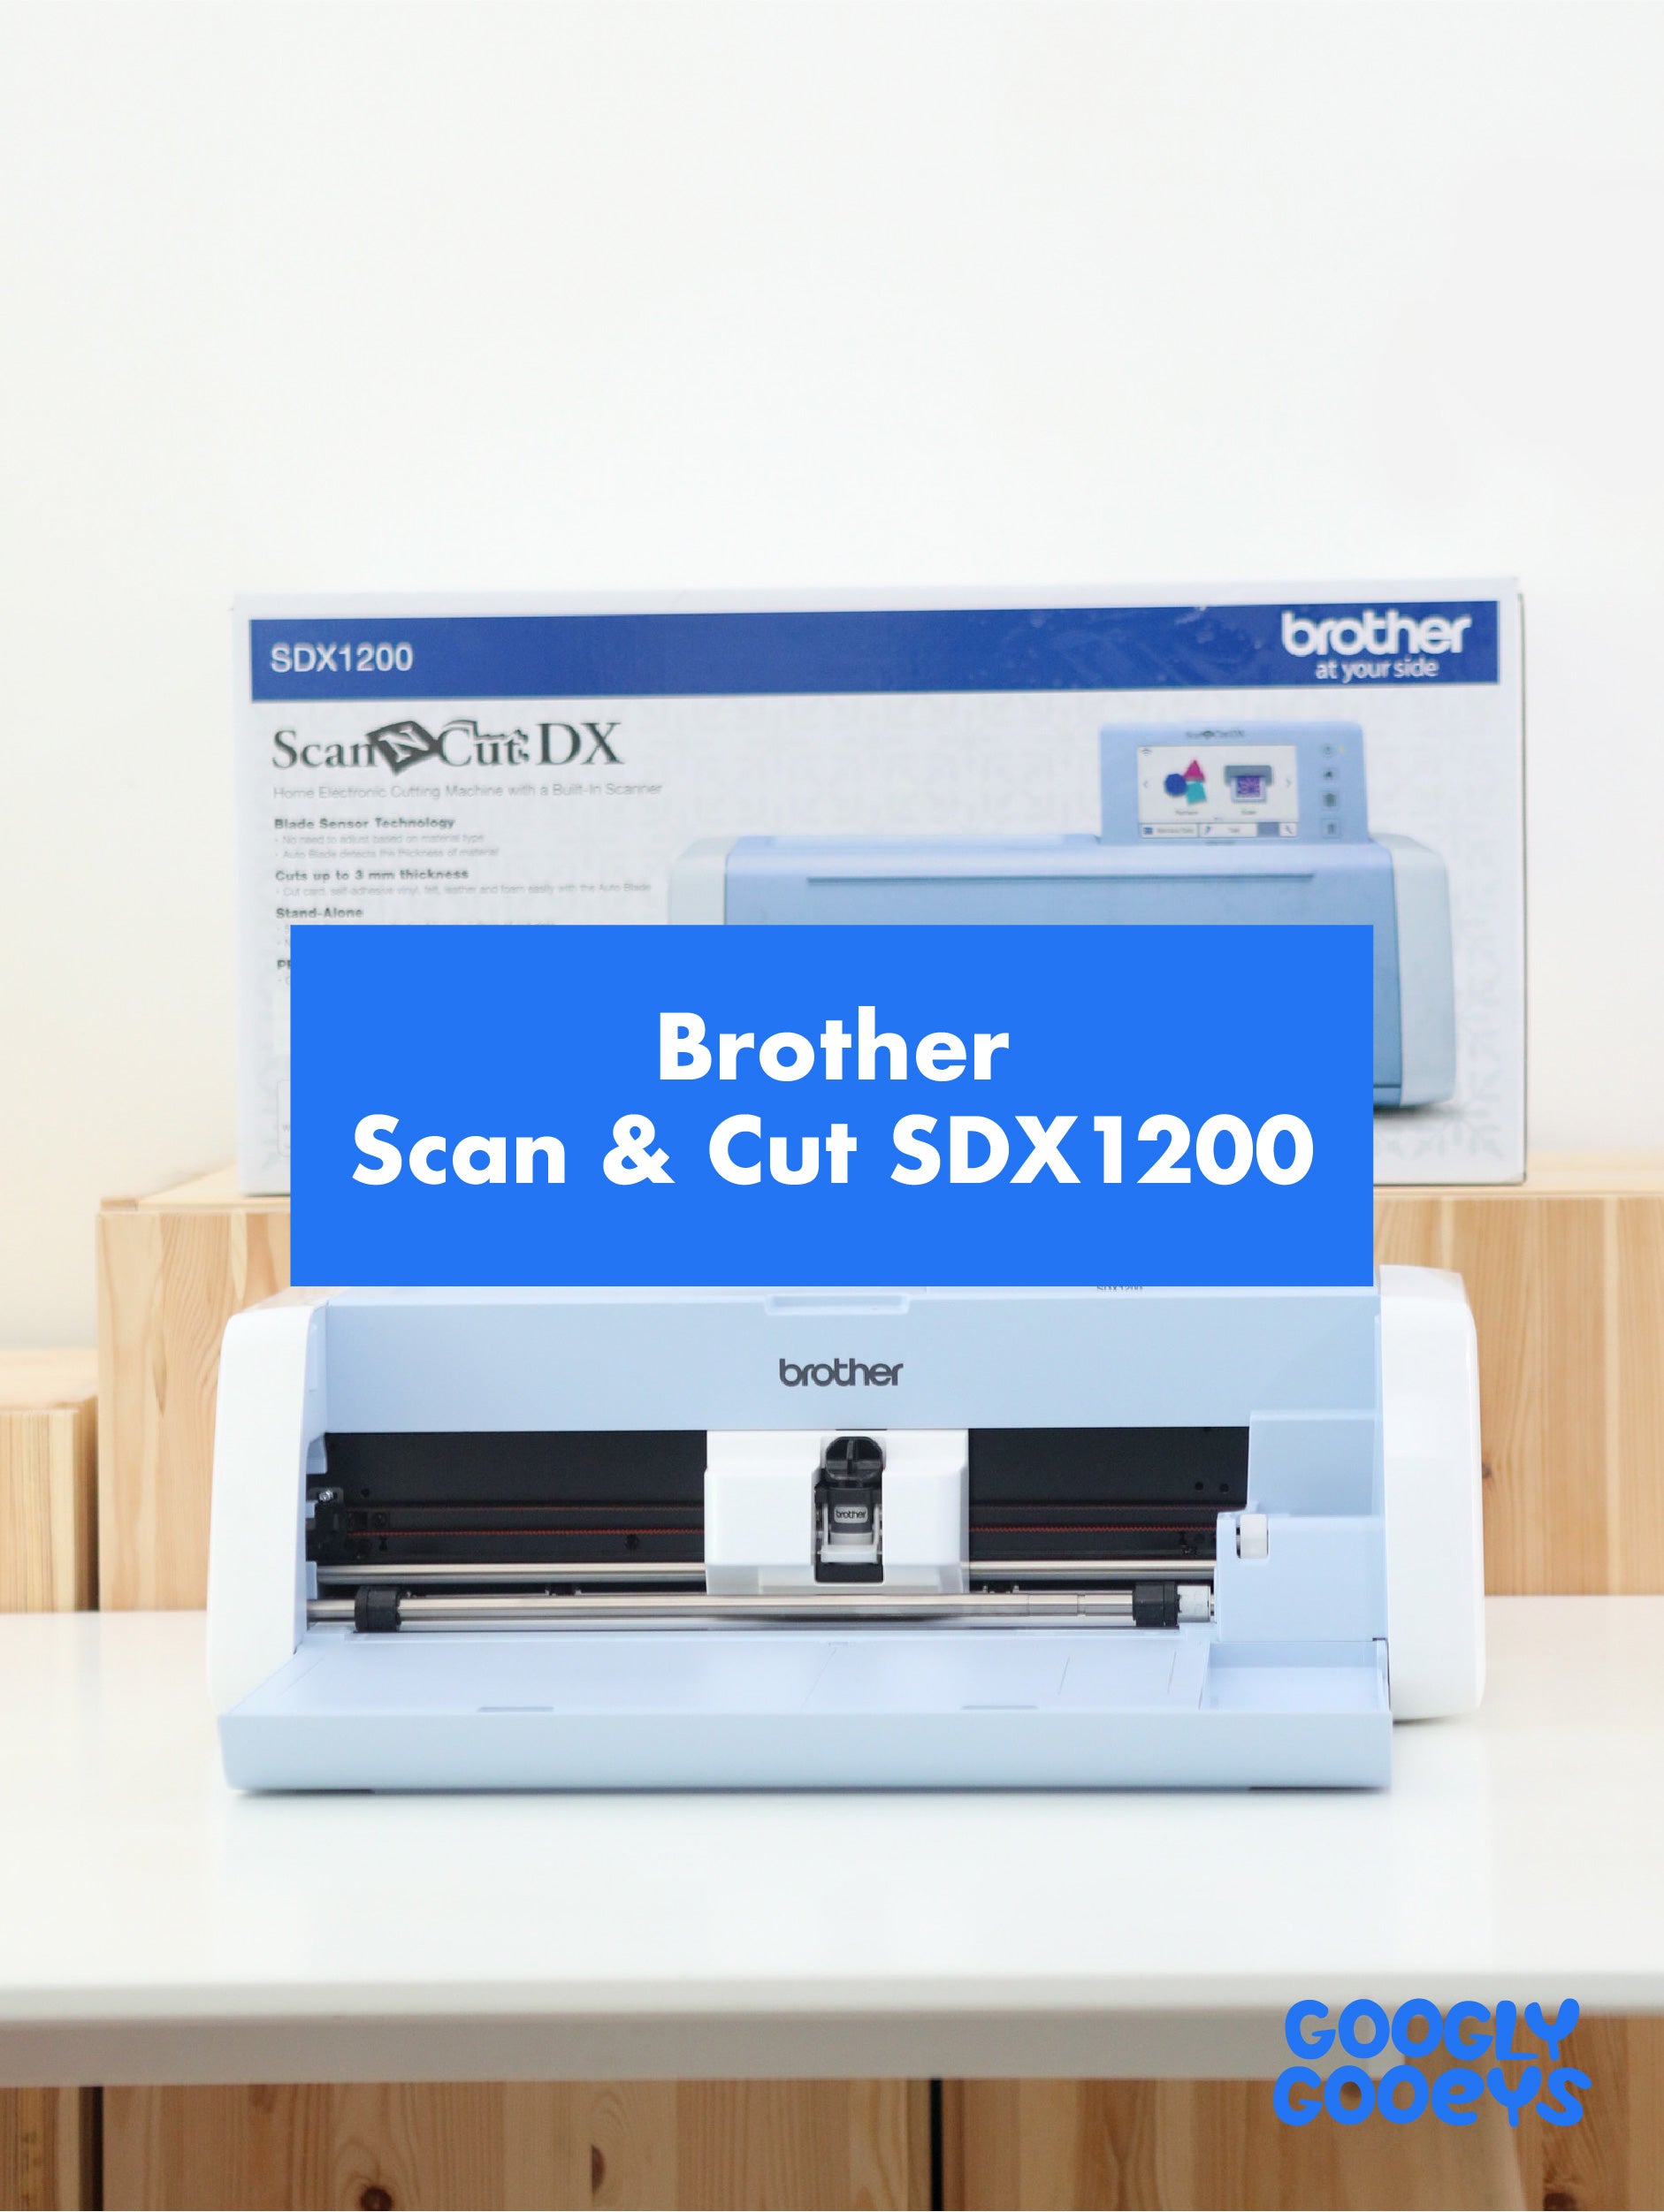 Brother Scan N Cut: SDX1200 & SDX900